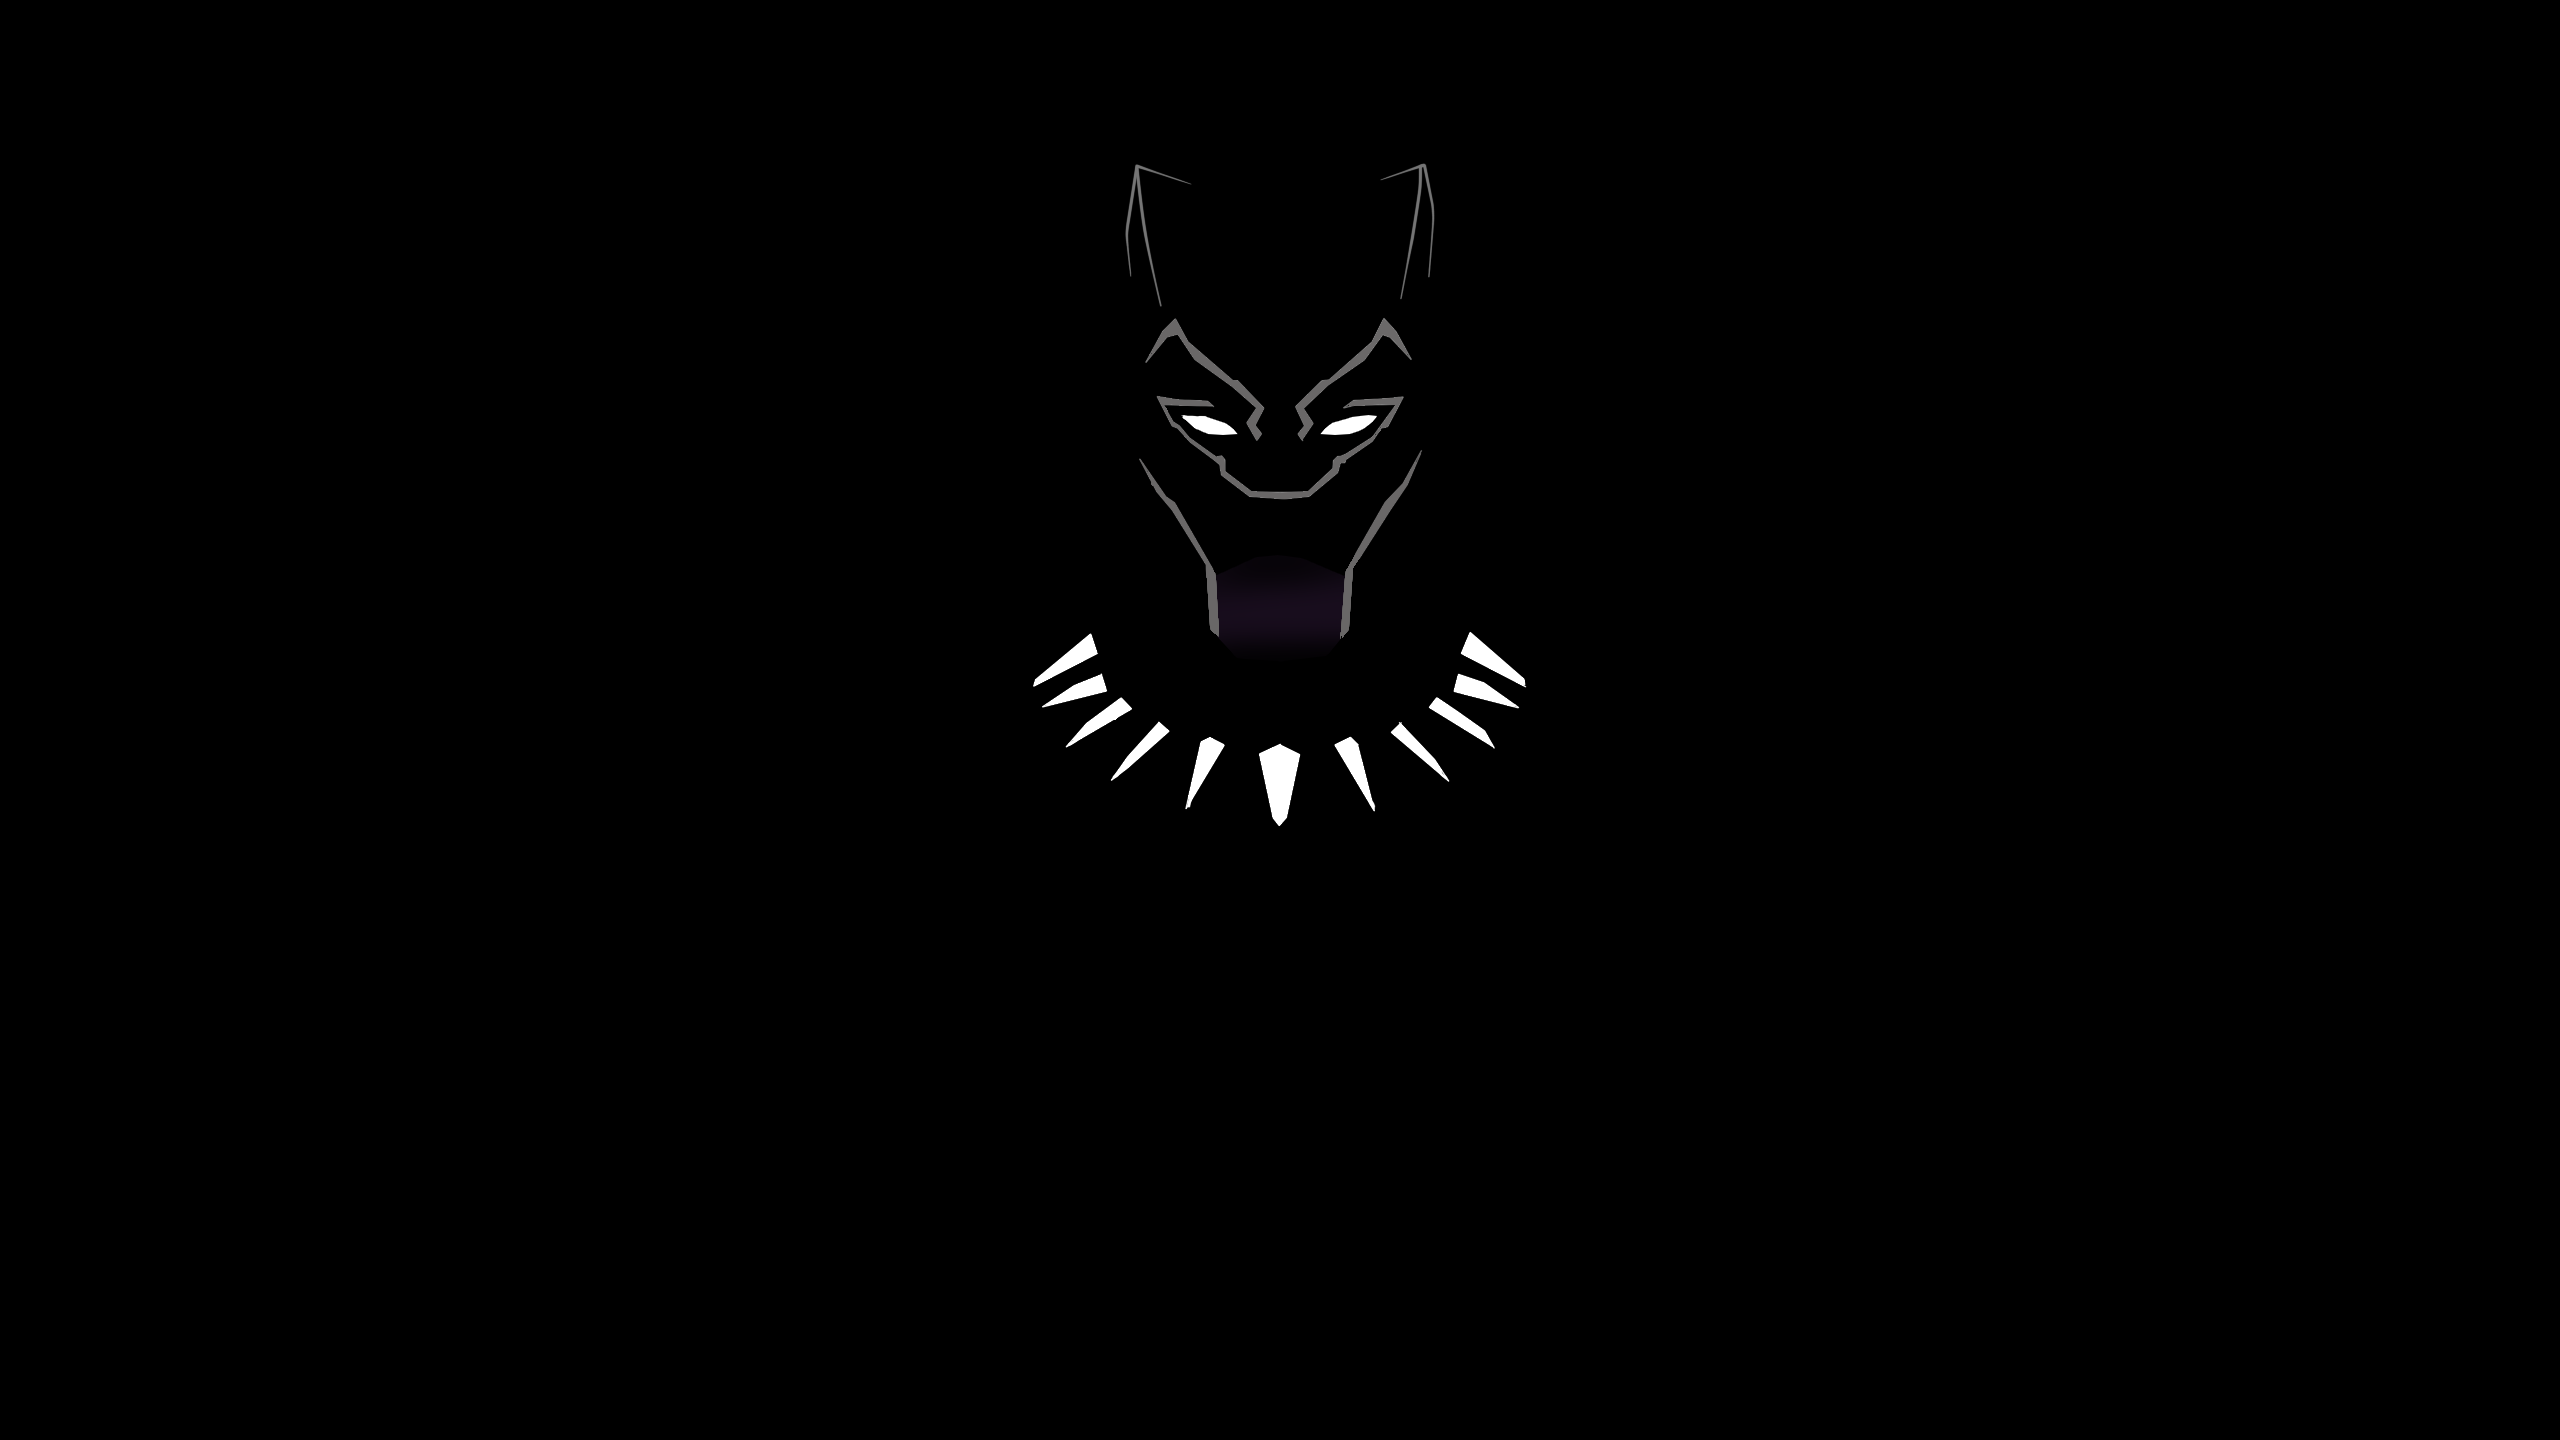  Black  Panther  Wallpaper  by Darkxpazz on DeviantArt